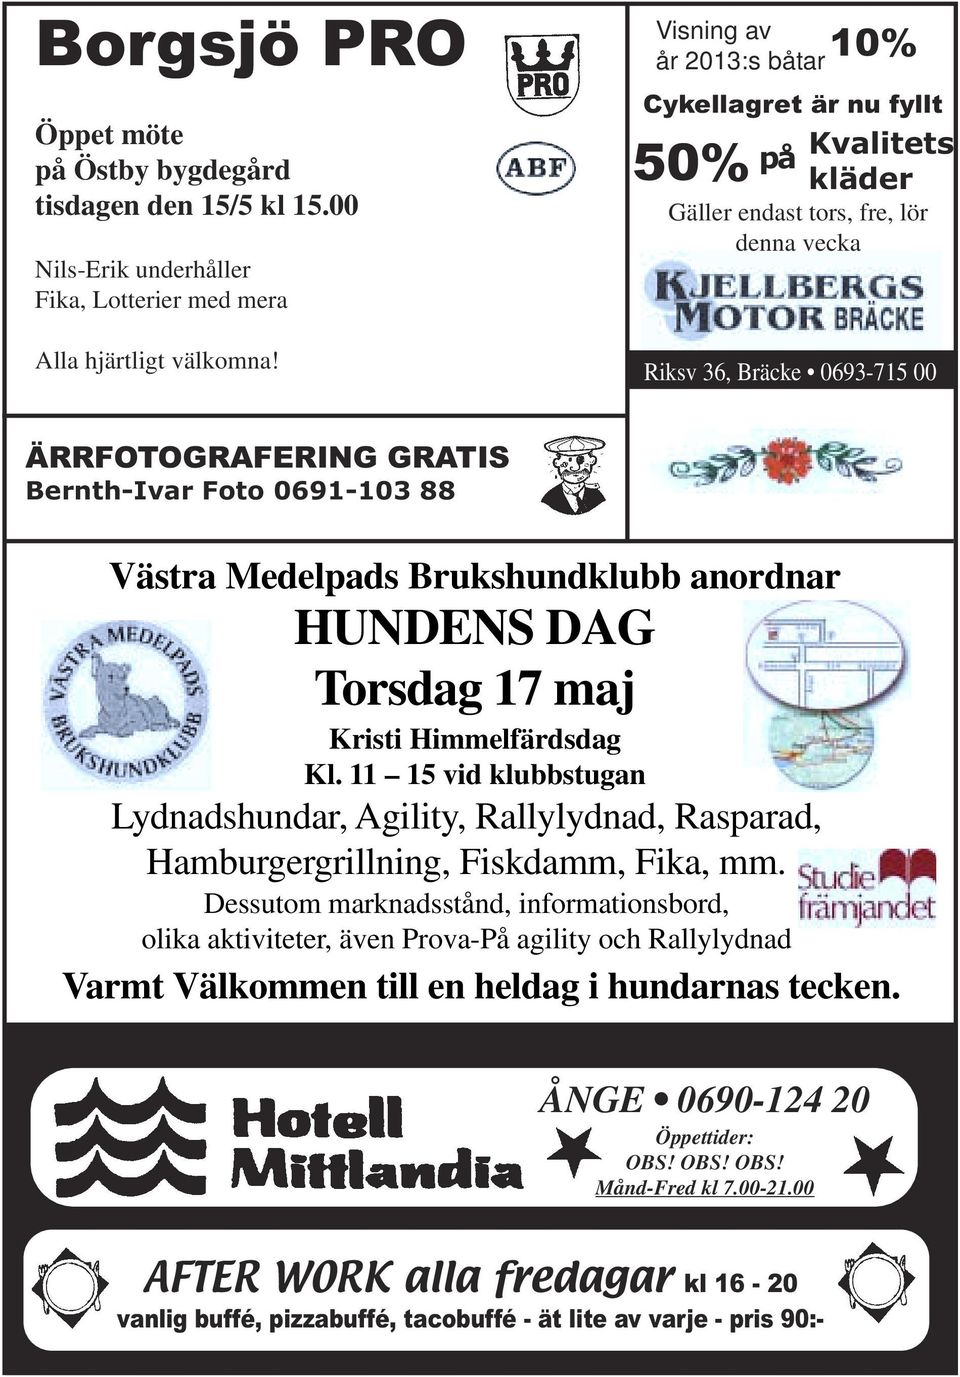 88 Västra Medelpads Brukshundklubb anordnar HUNDENS DAG Torsdag 17 maj Kristi Himmelfärdsdag Kl.